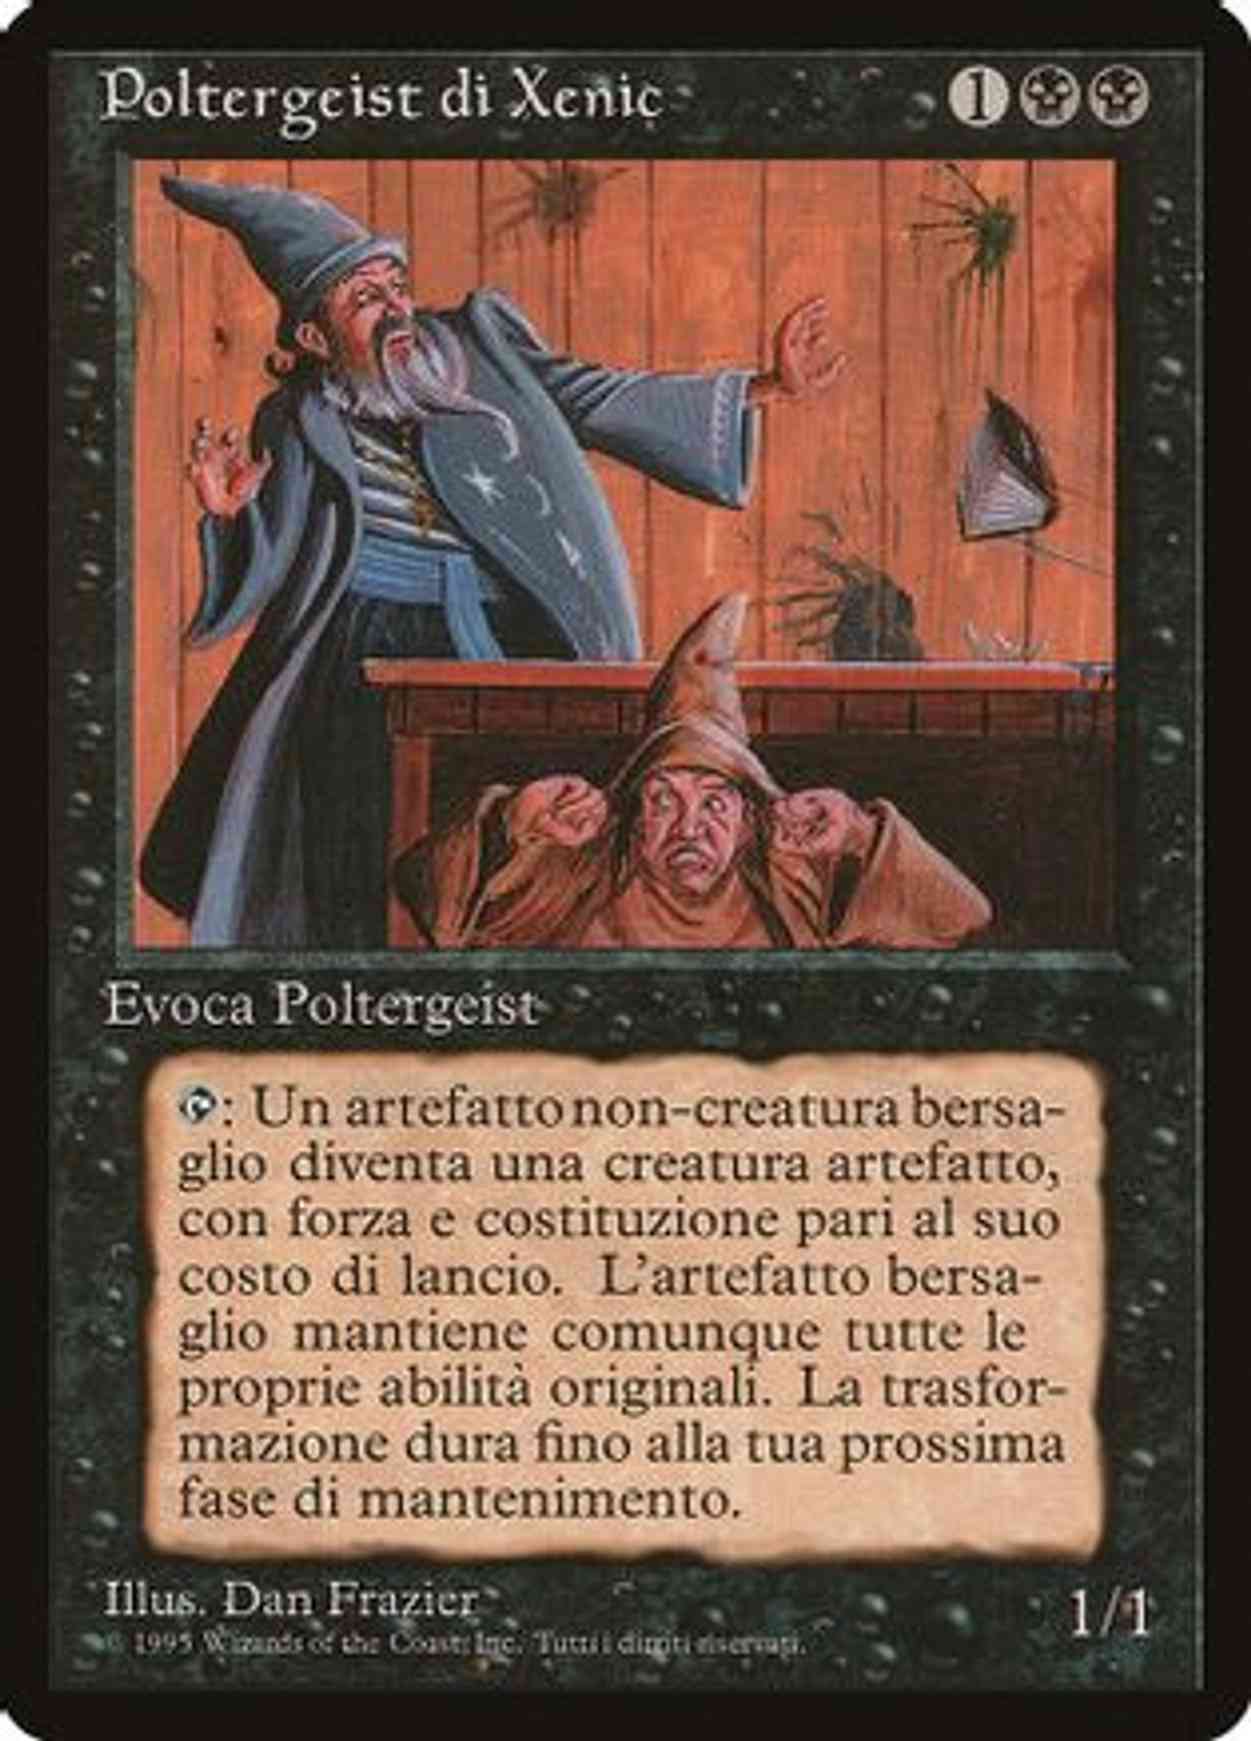 Xenic Poltergeist (Italian) - "Poltergeist di Xenic" magic card front